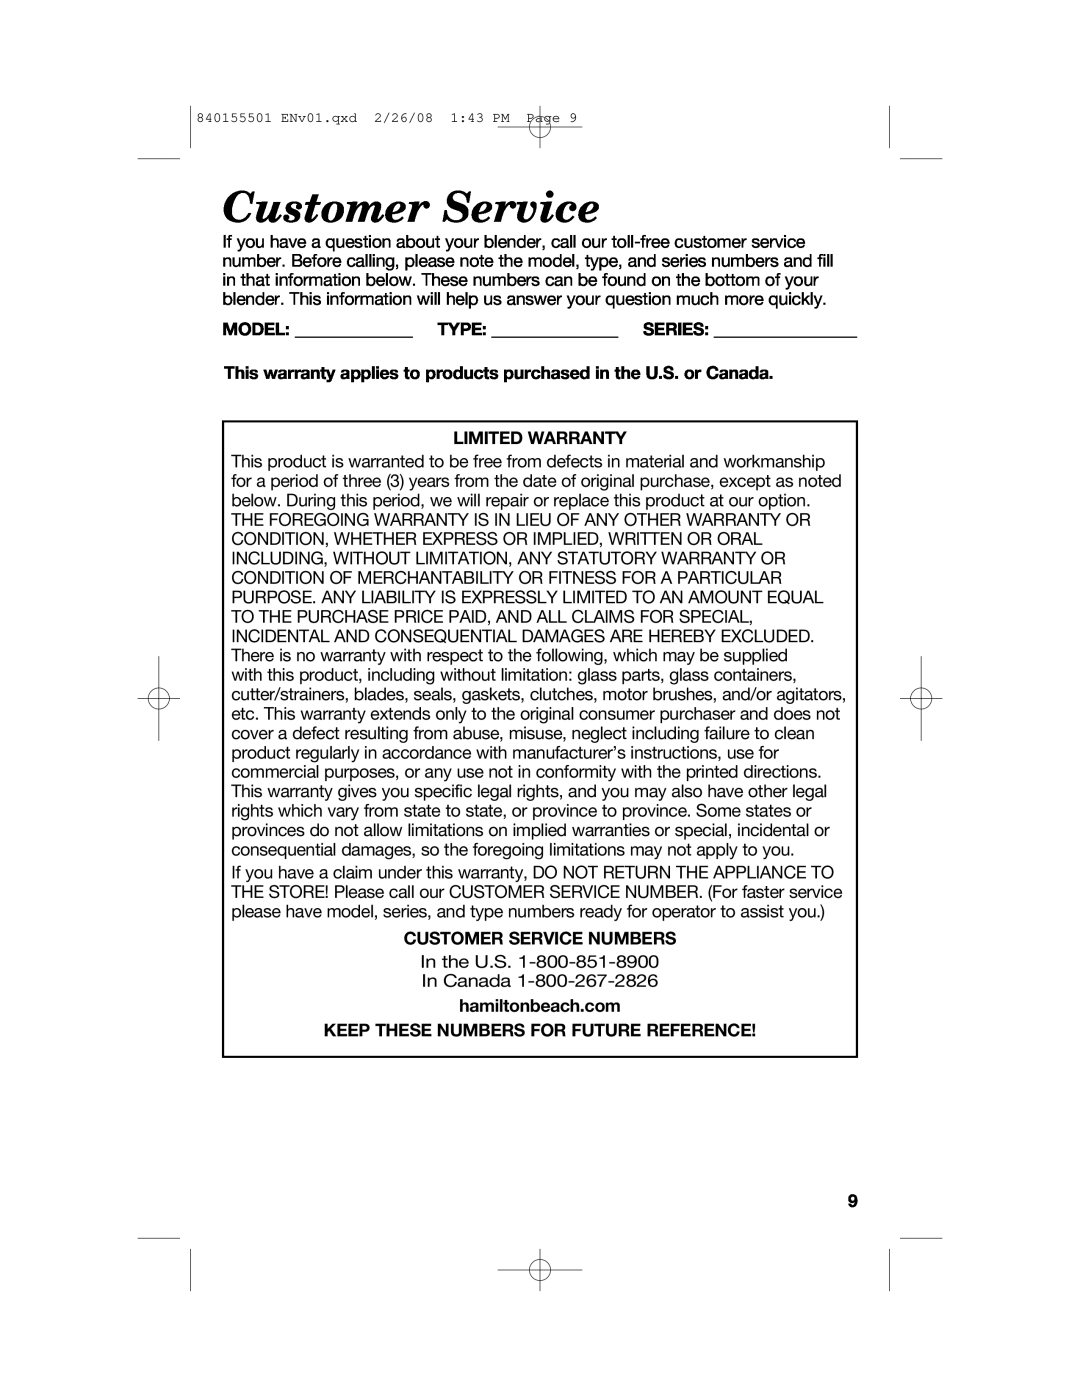 Hamilton Beach 54616C manual Model Type Series, Limited Warranty, Customer Service Numbers 